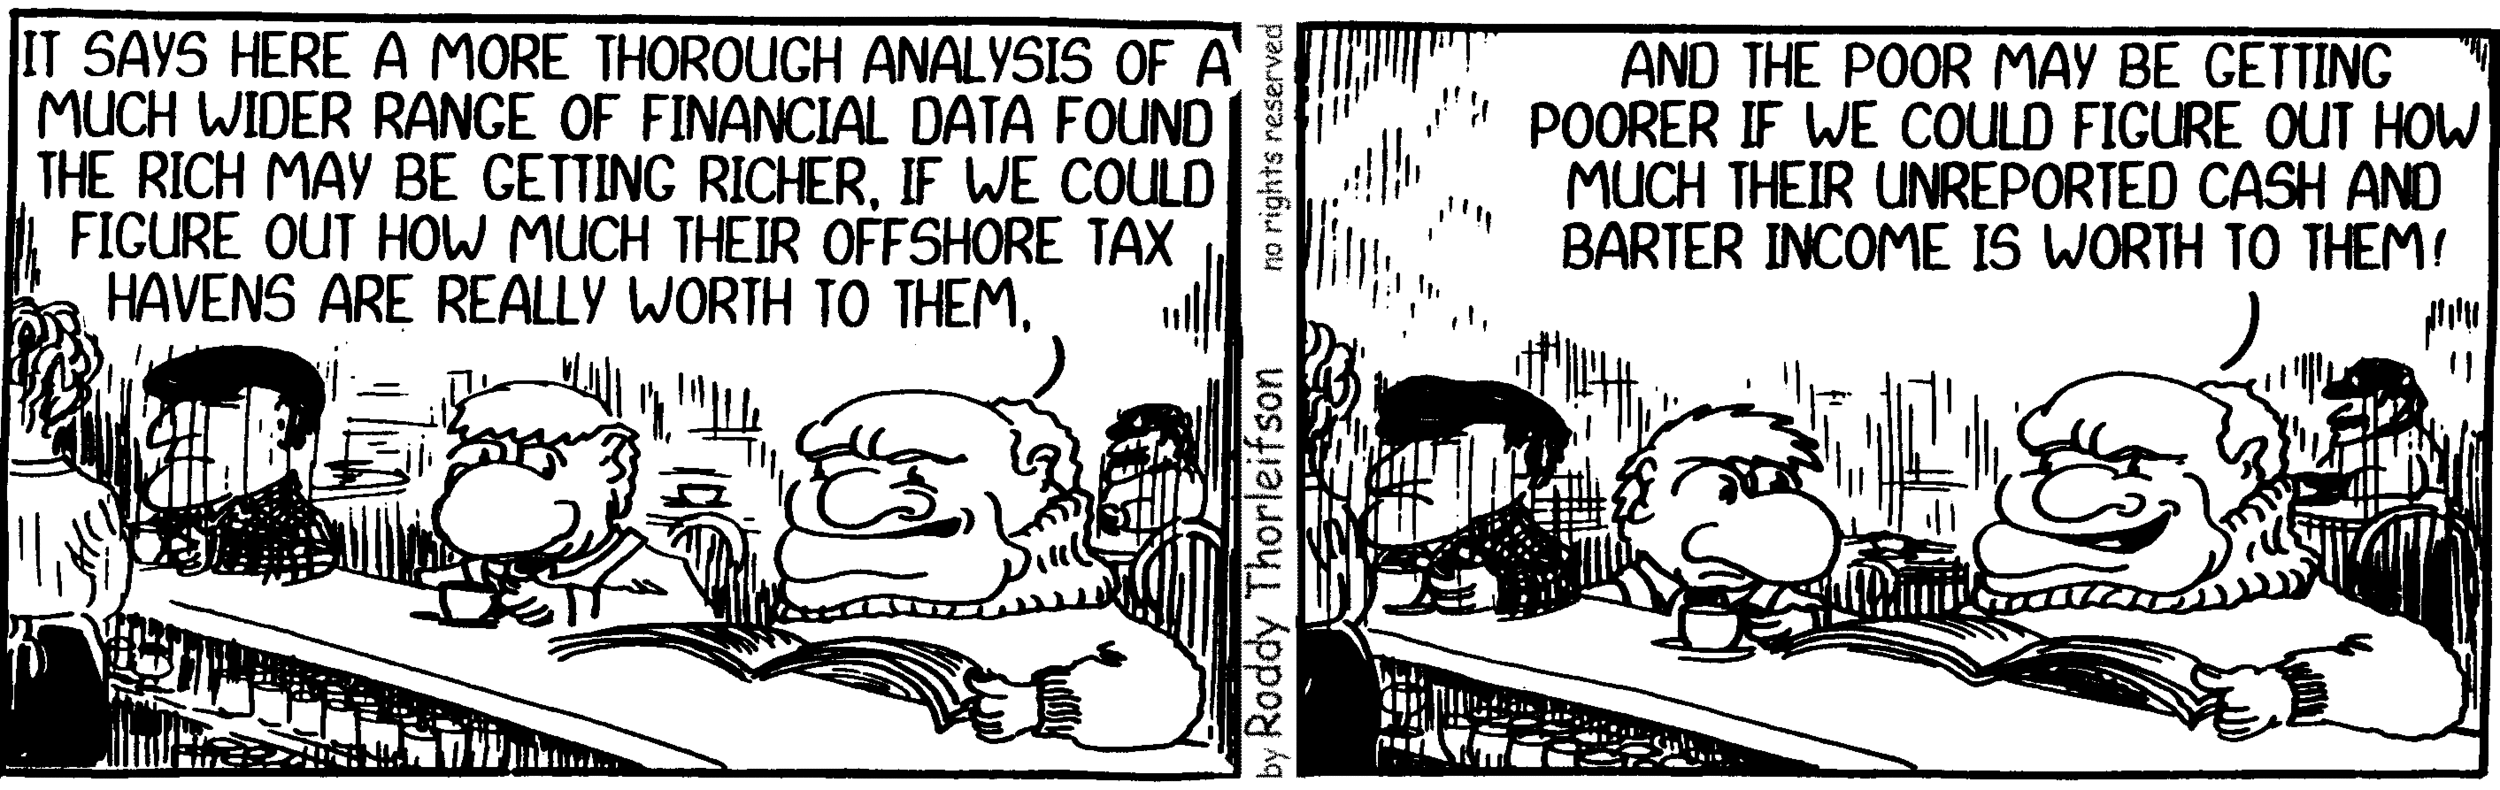 free cartoon off-shore economic data wealth poverty